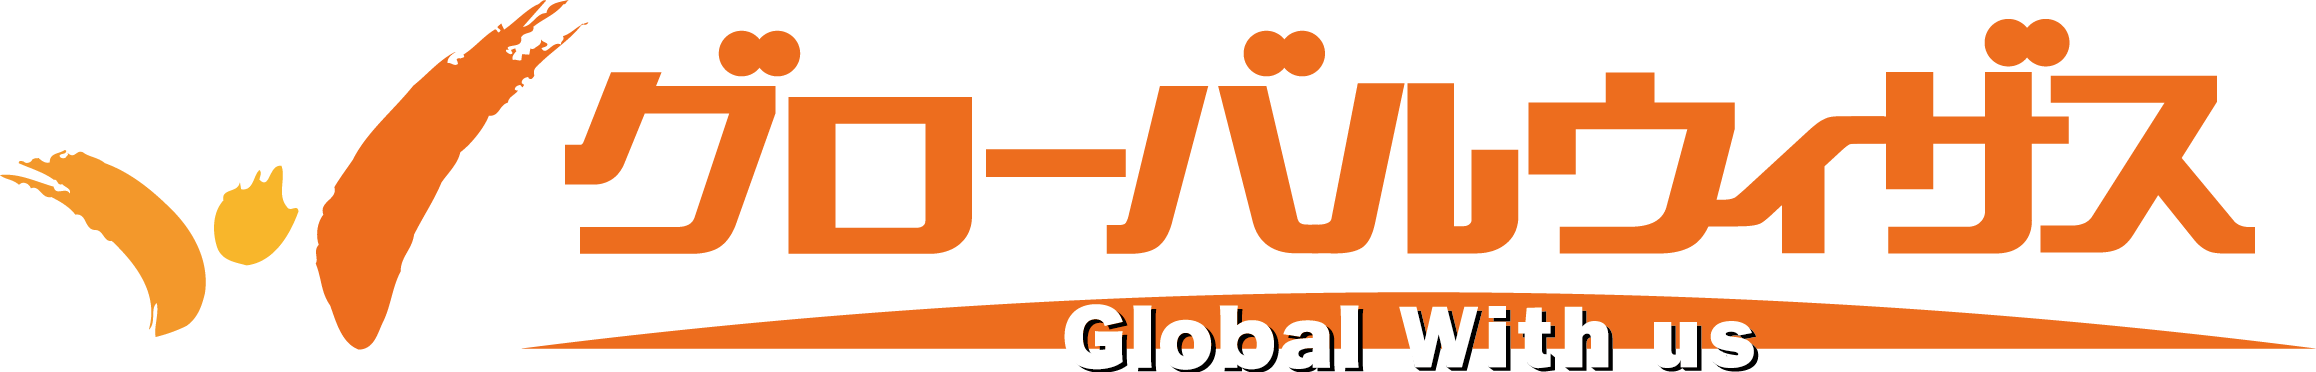 Global With us logo